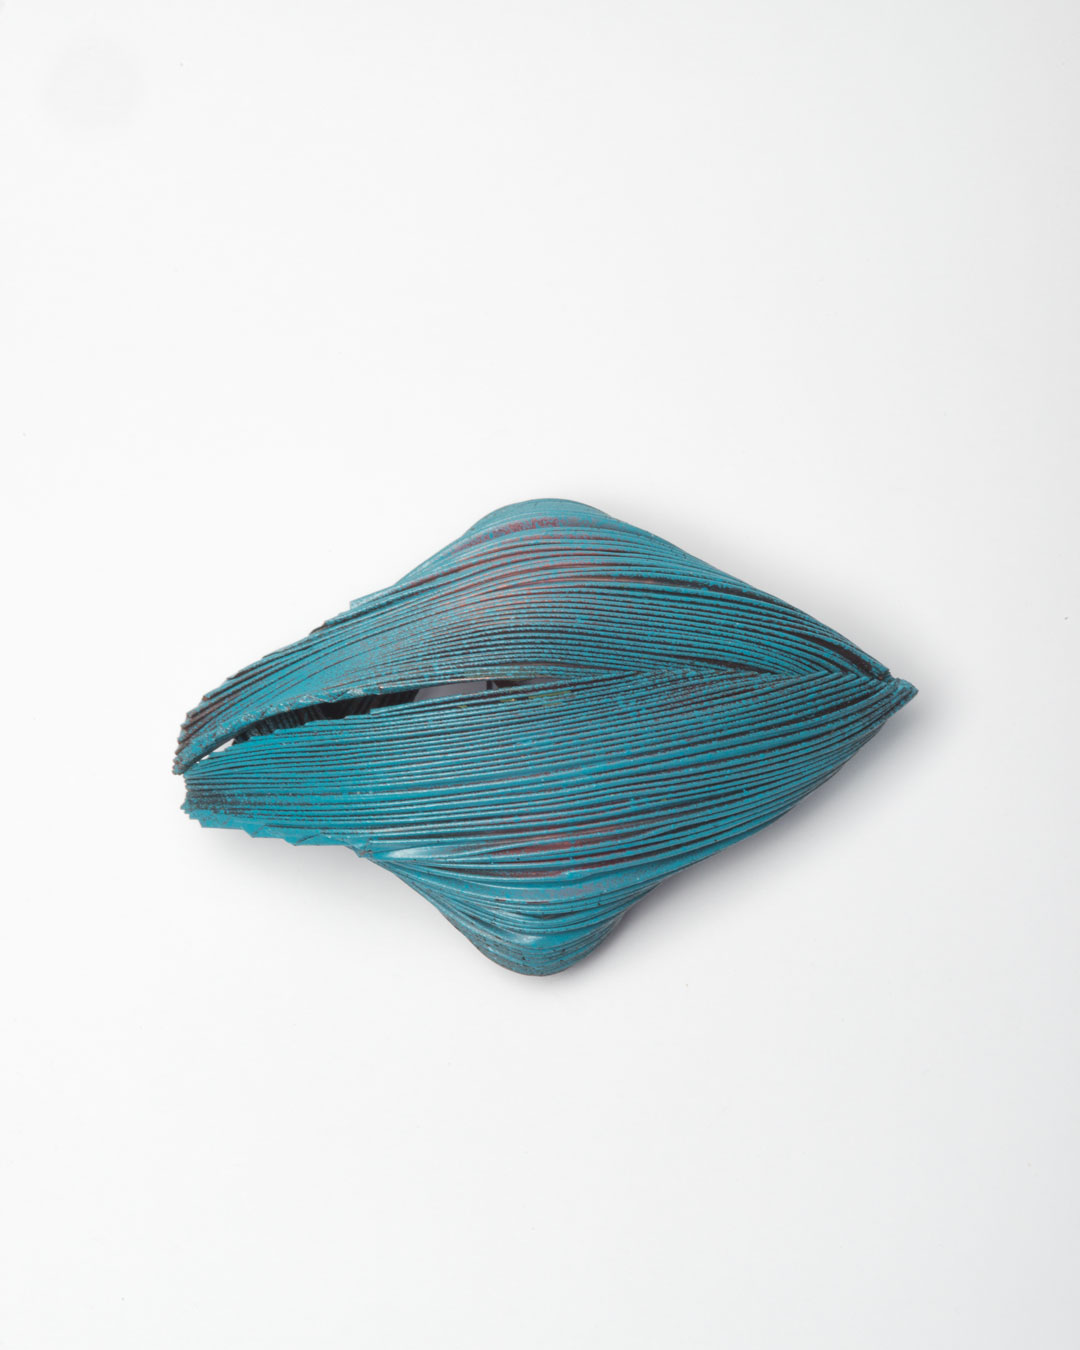 Li Liang, Nr. 7: Line, 2018, brooch; copper, 100 x 80 x 60 mm,€1650